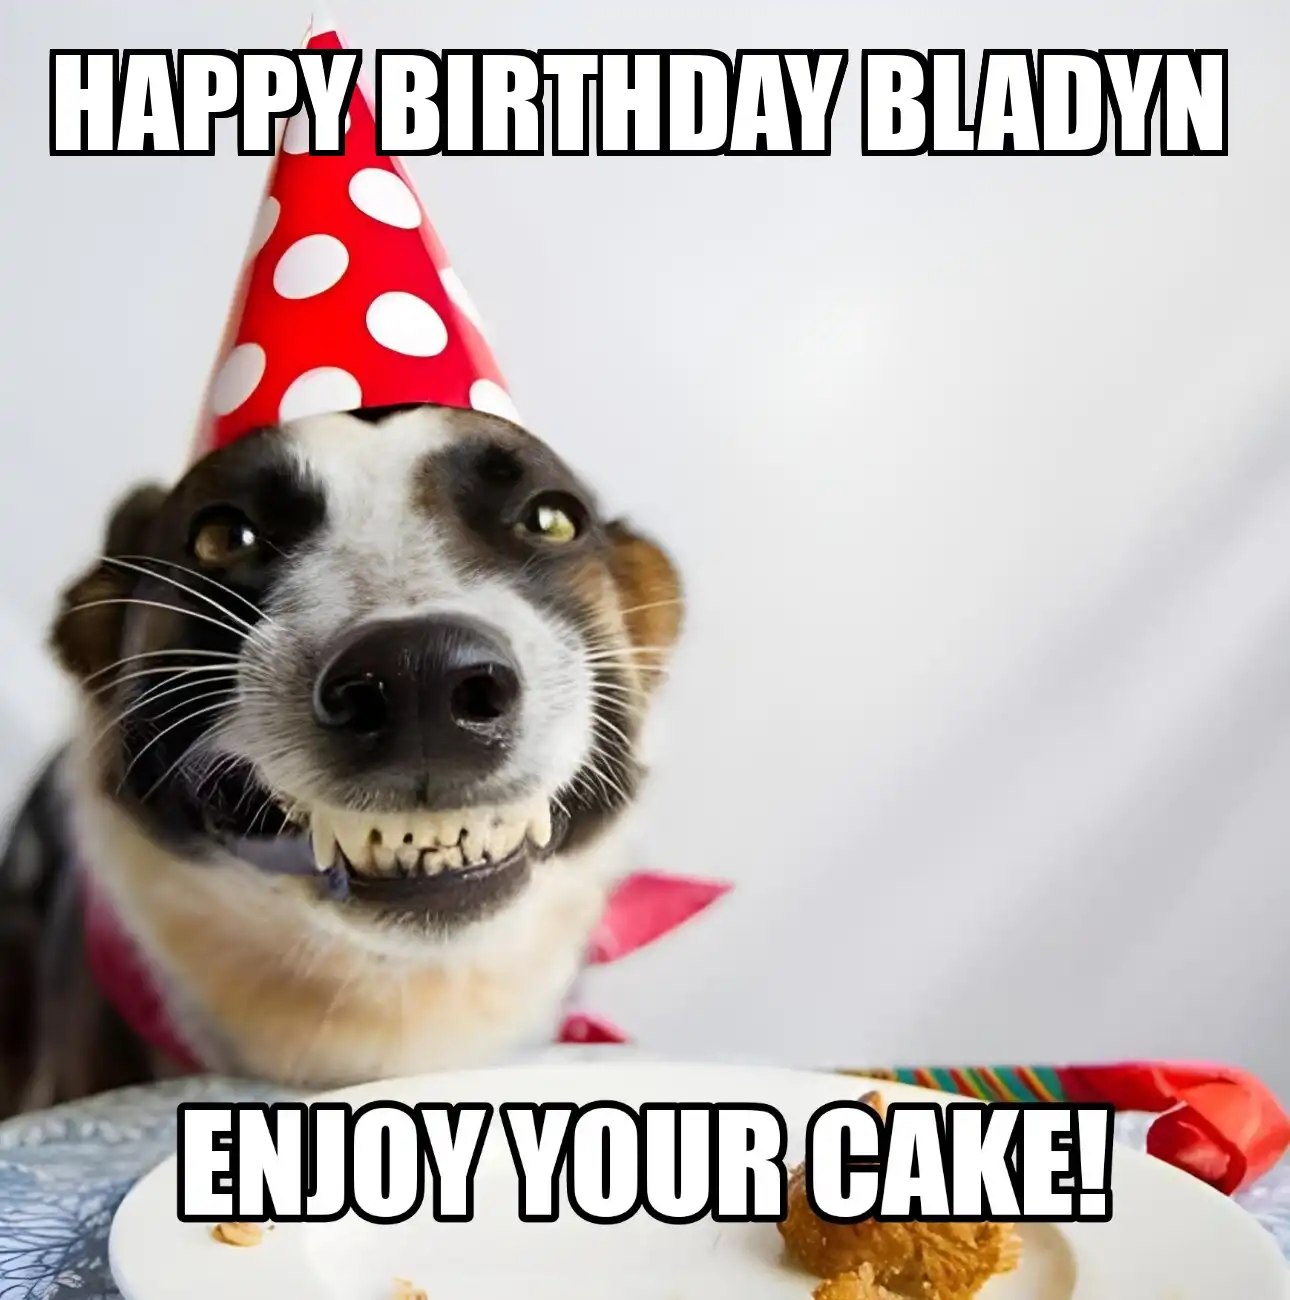 Happy Birthday Bladyn Enjoy Your Cake Dog Meme